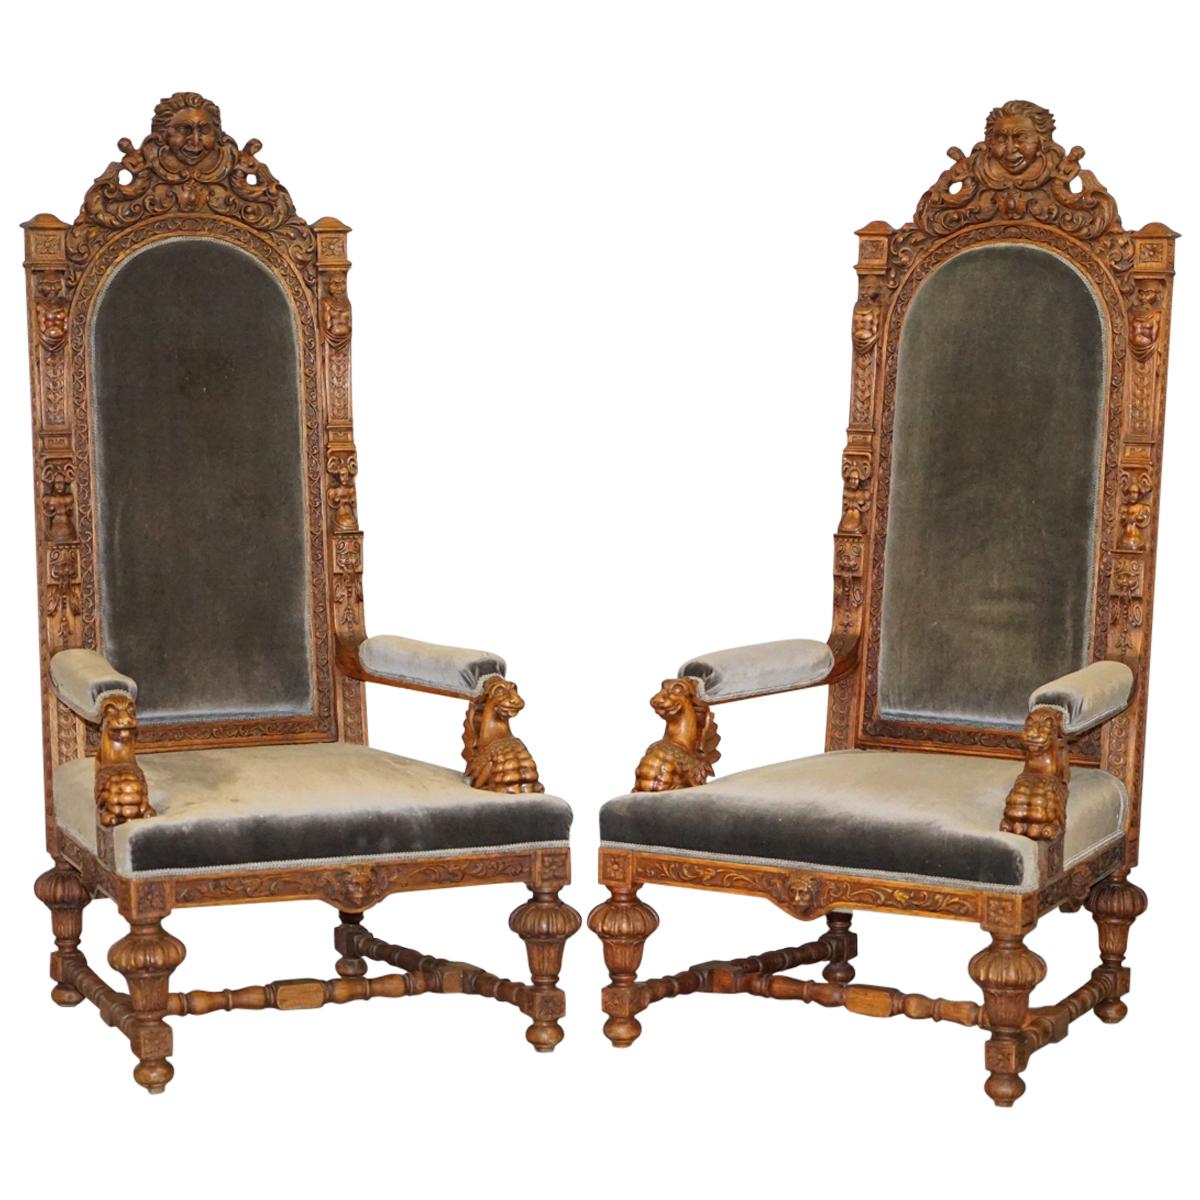 Pair of Enormous Victorian Jacobean Revival Cherub Putti Carved Throne Armchairs